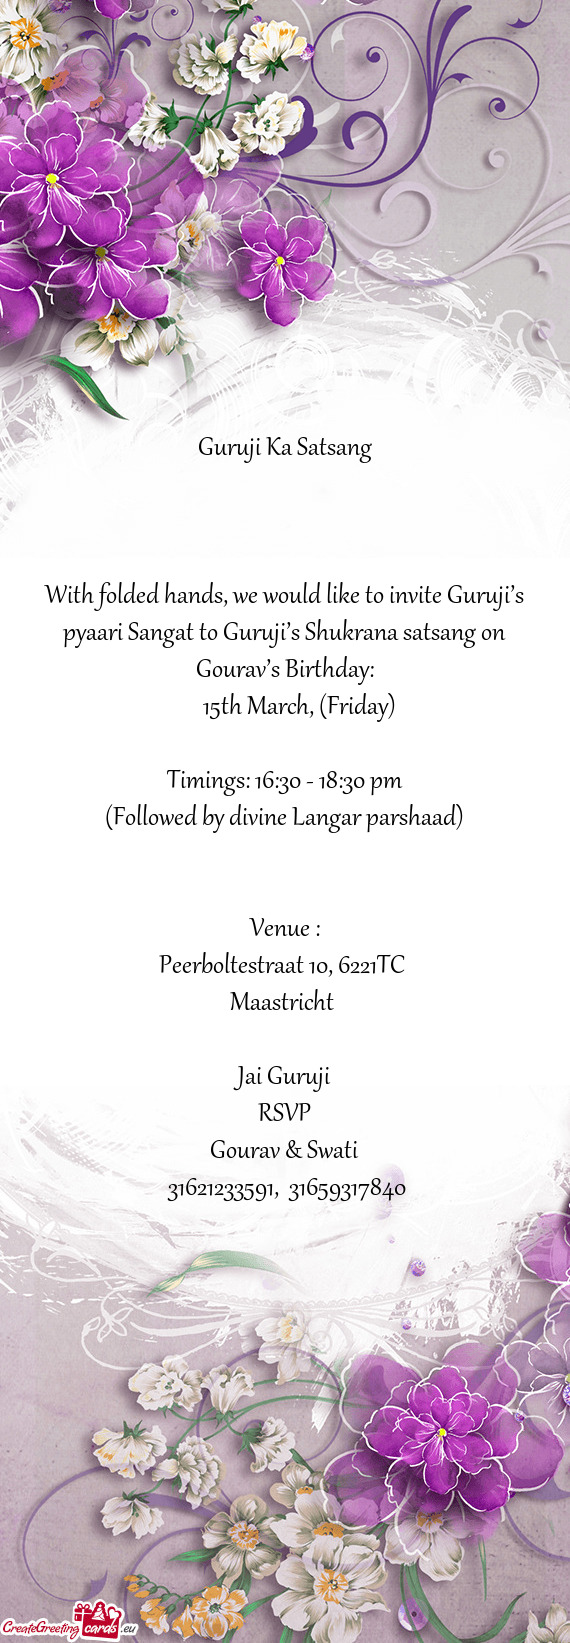 With folded hands, we would like to invite Guruji’s pyaari Sangat to Guruji’s Shukrana satsang o